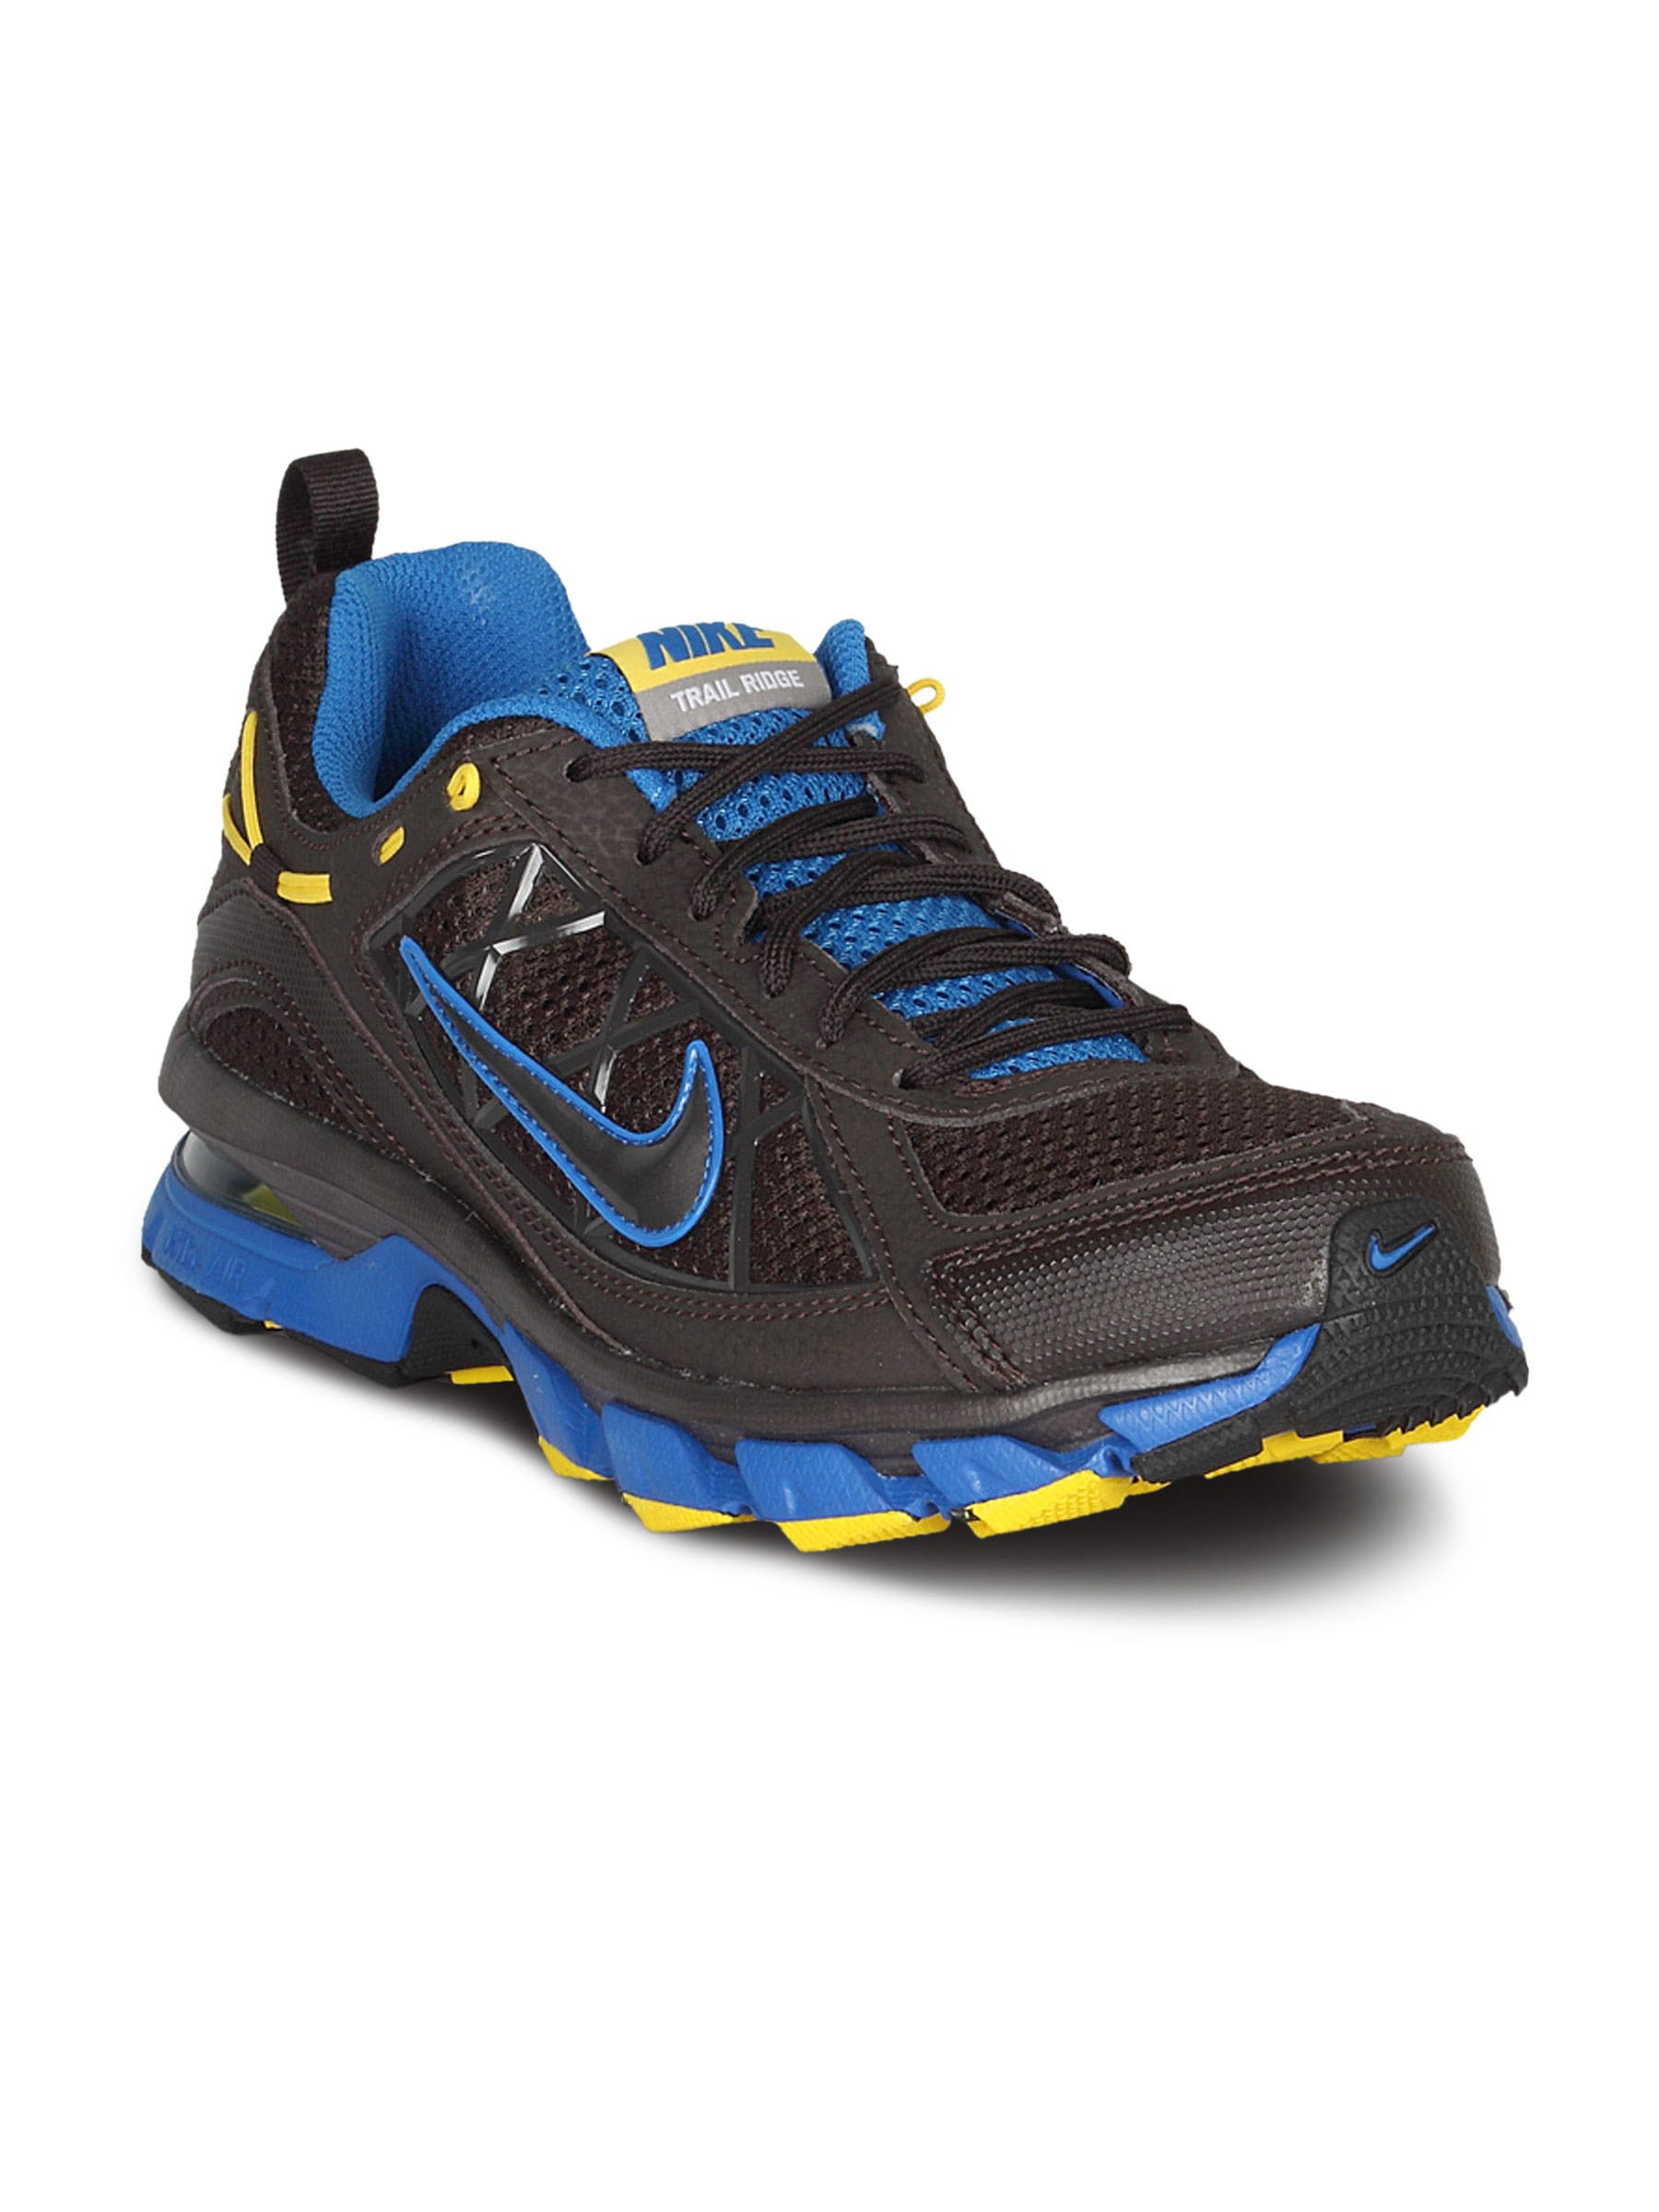 Nike Men's Air Trail Ridge Black Shoe